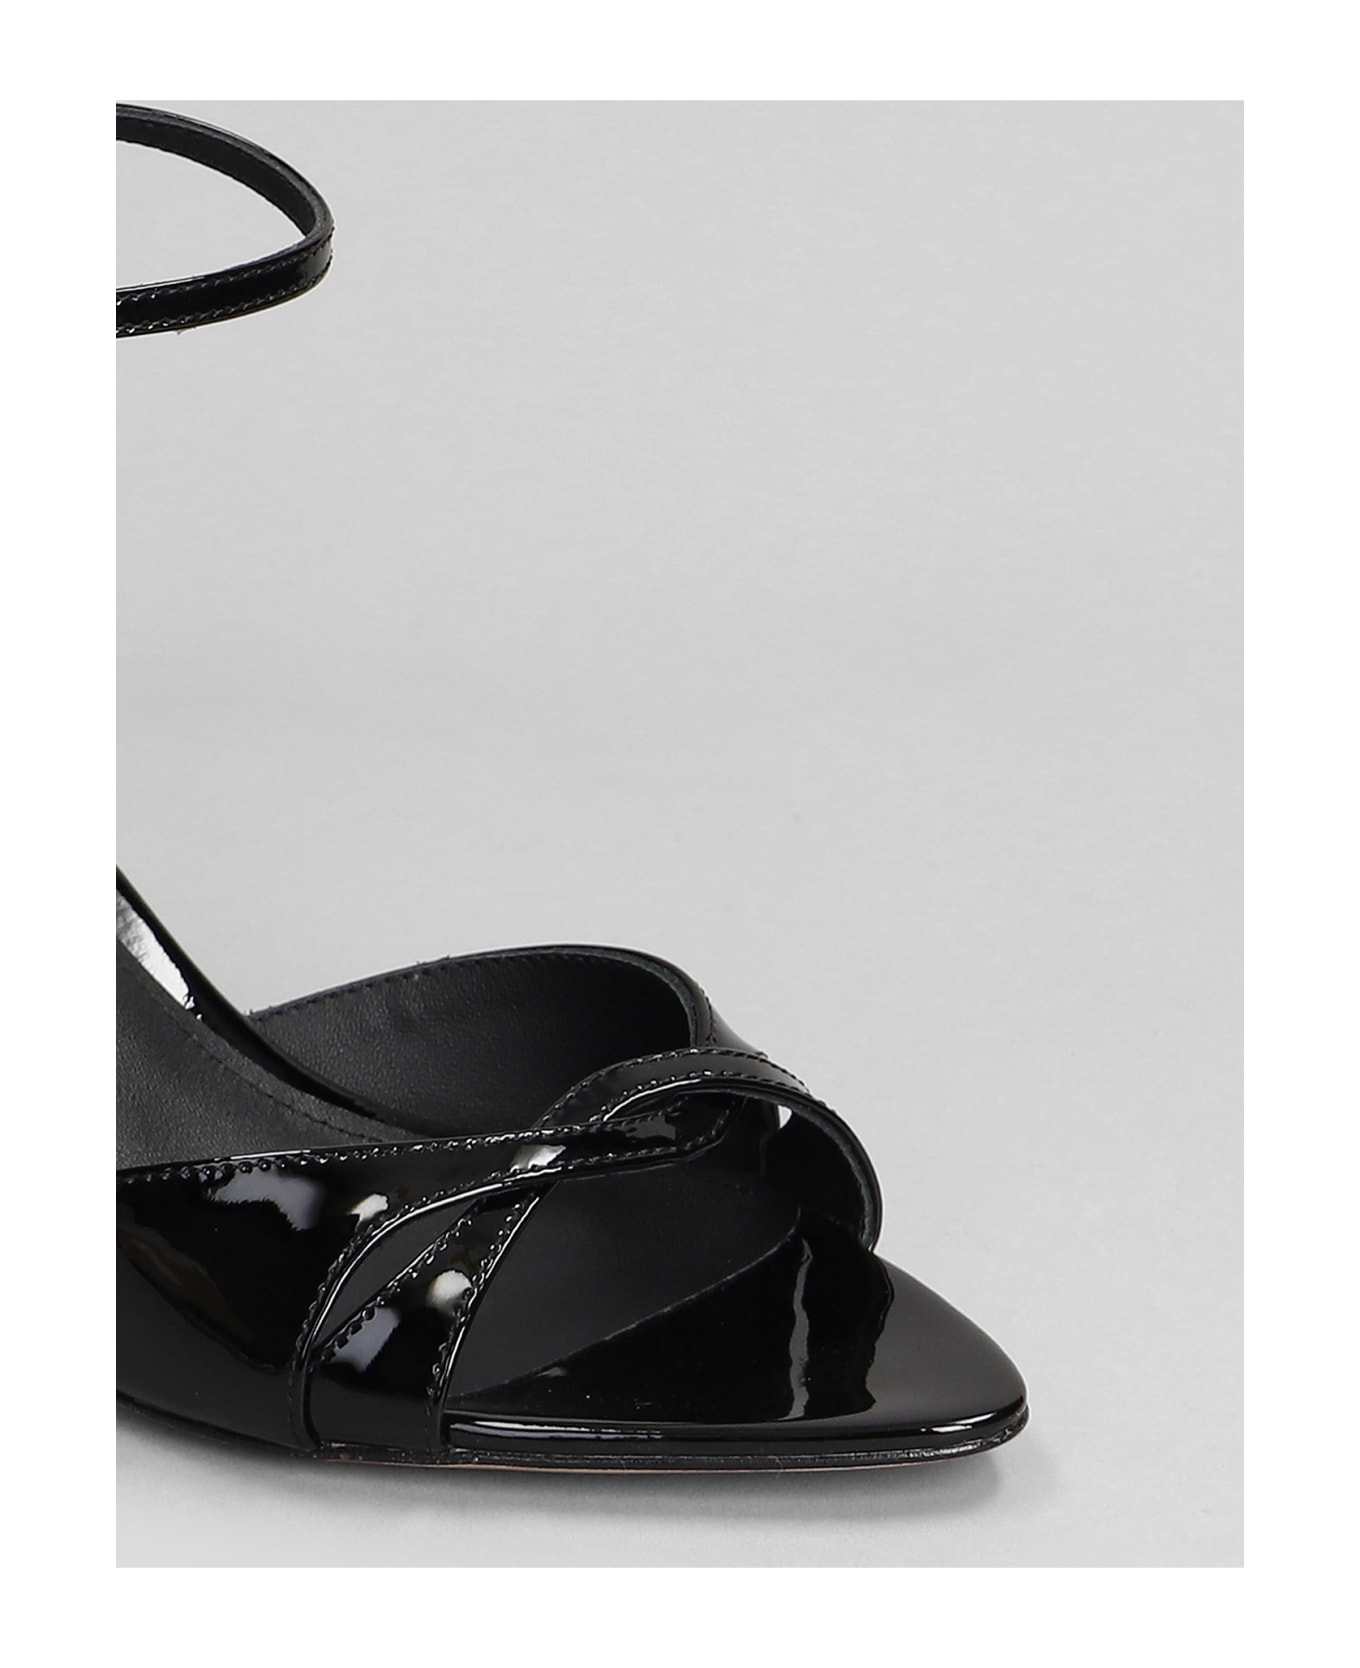 Lola Cruz Bianca 65 Sandals In Black Patent Leather - black サンダル